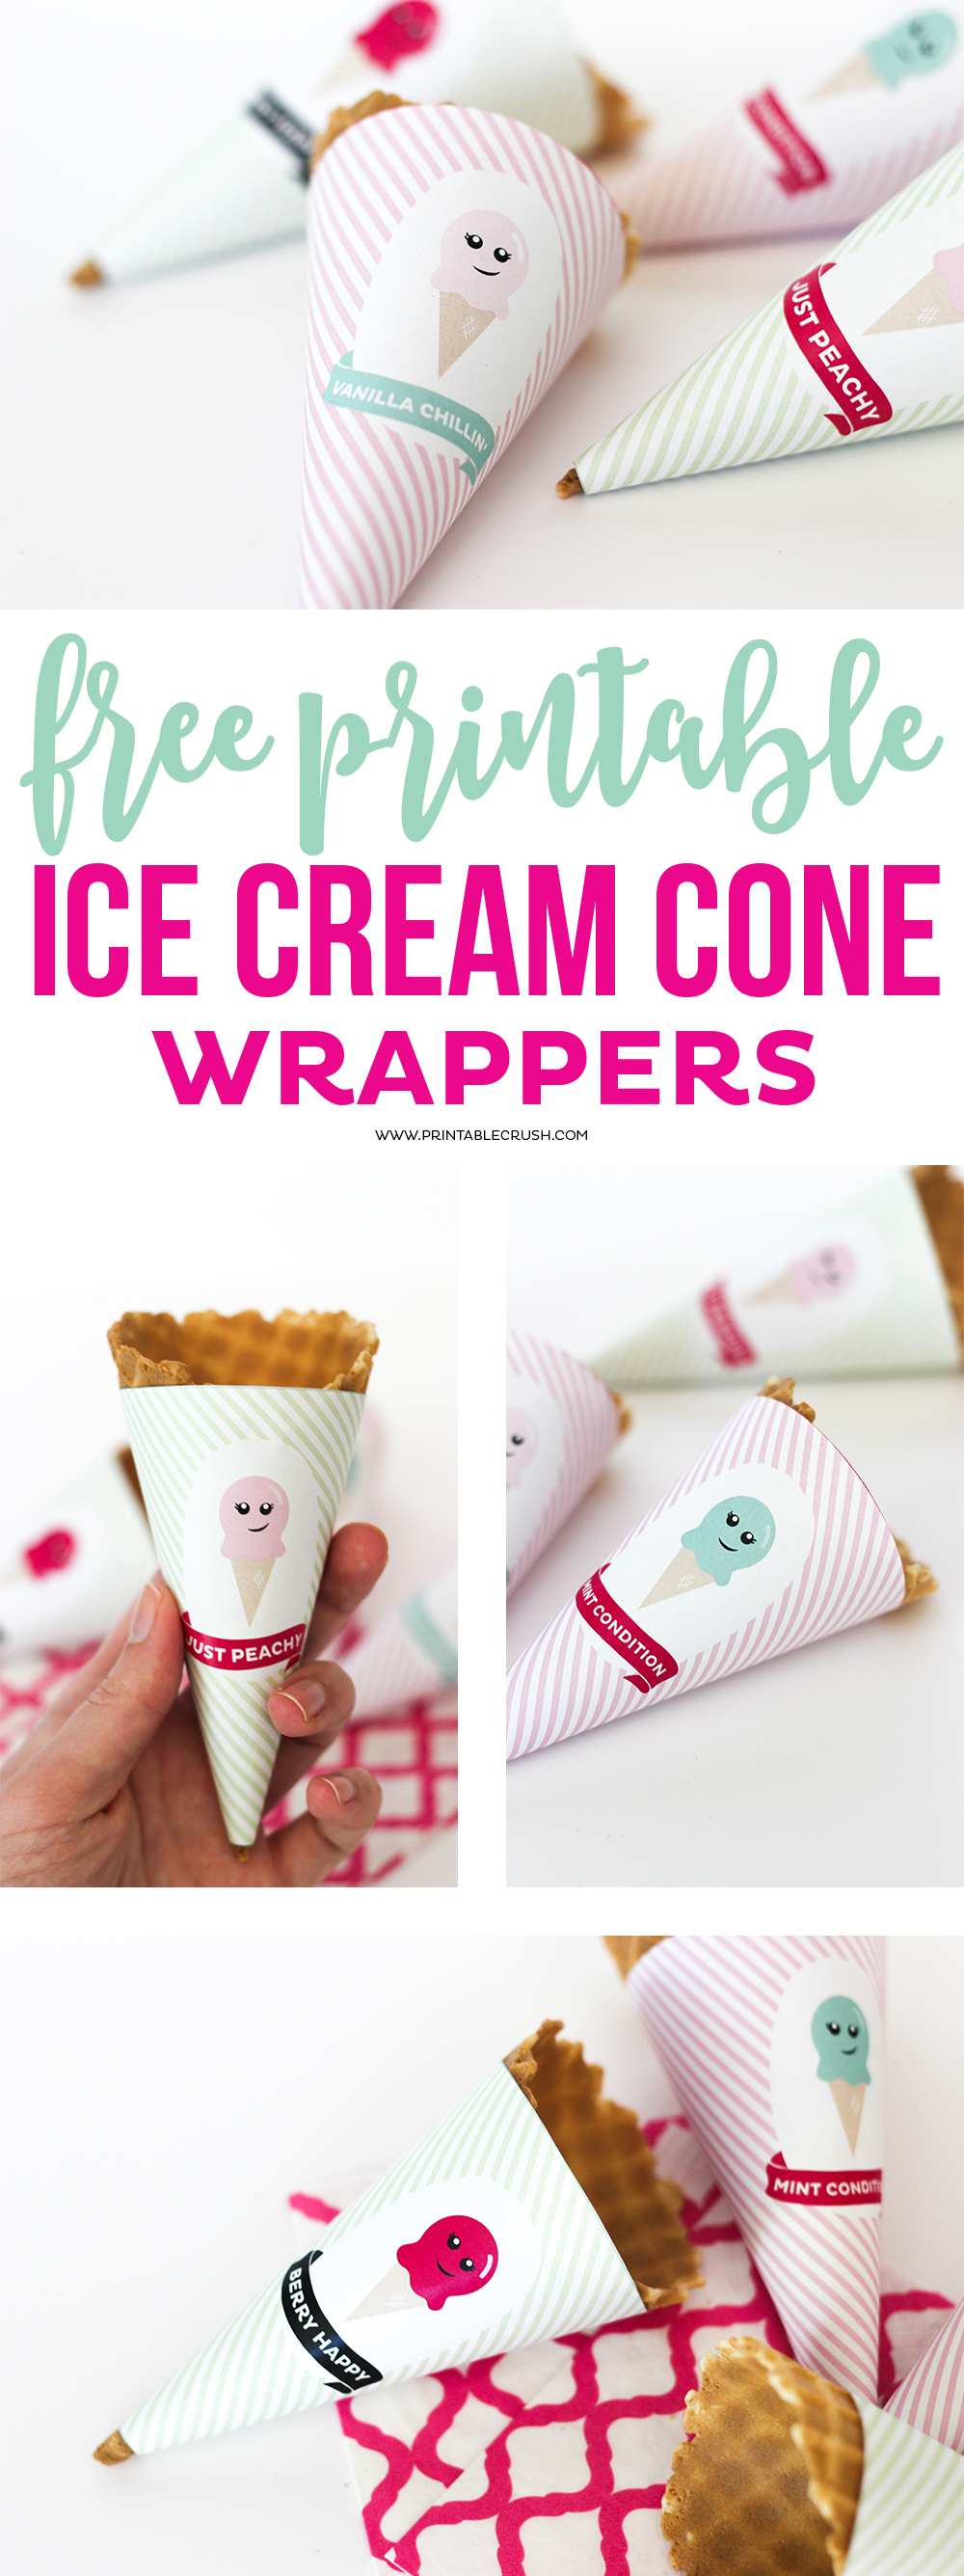 http://printablecrush.com/wp-content/uploads/2016/06/FREE-Printable-Ice-Cream-Wrappers-6-copy.jpg